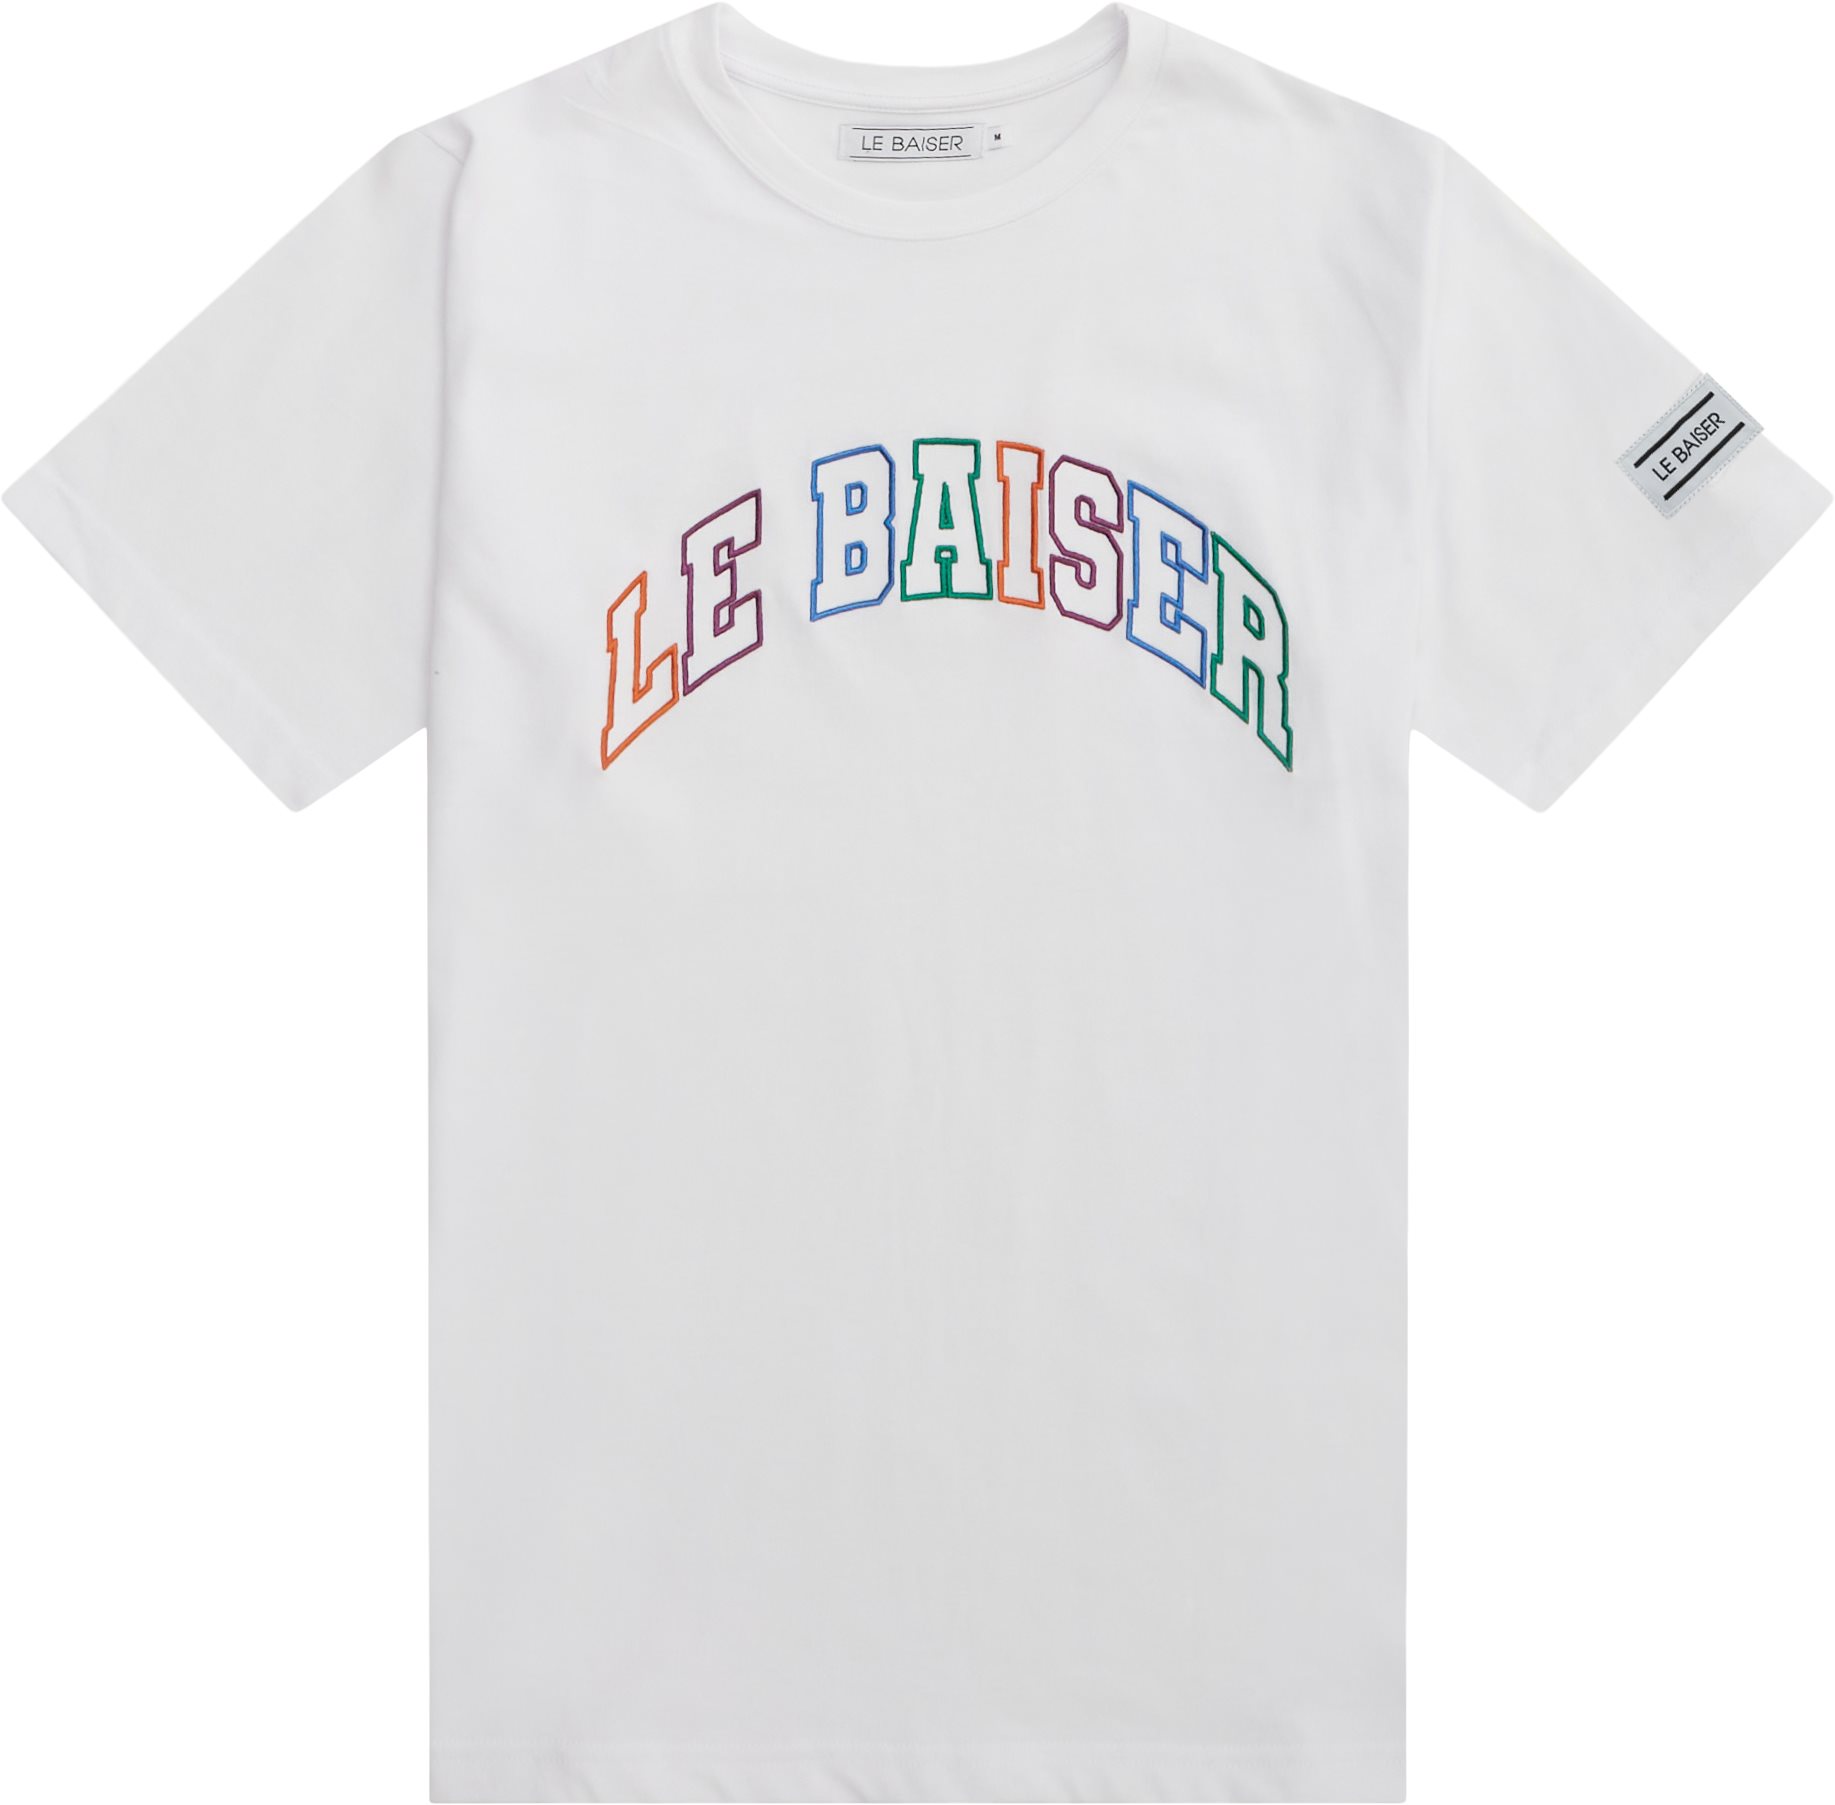 Le Baiser T-shirts PANTHEON White